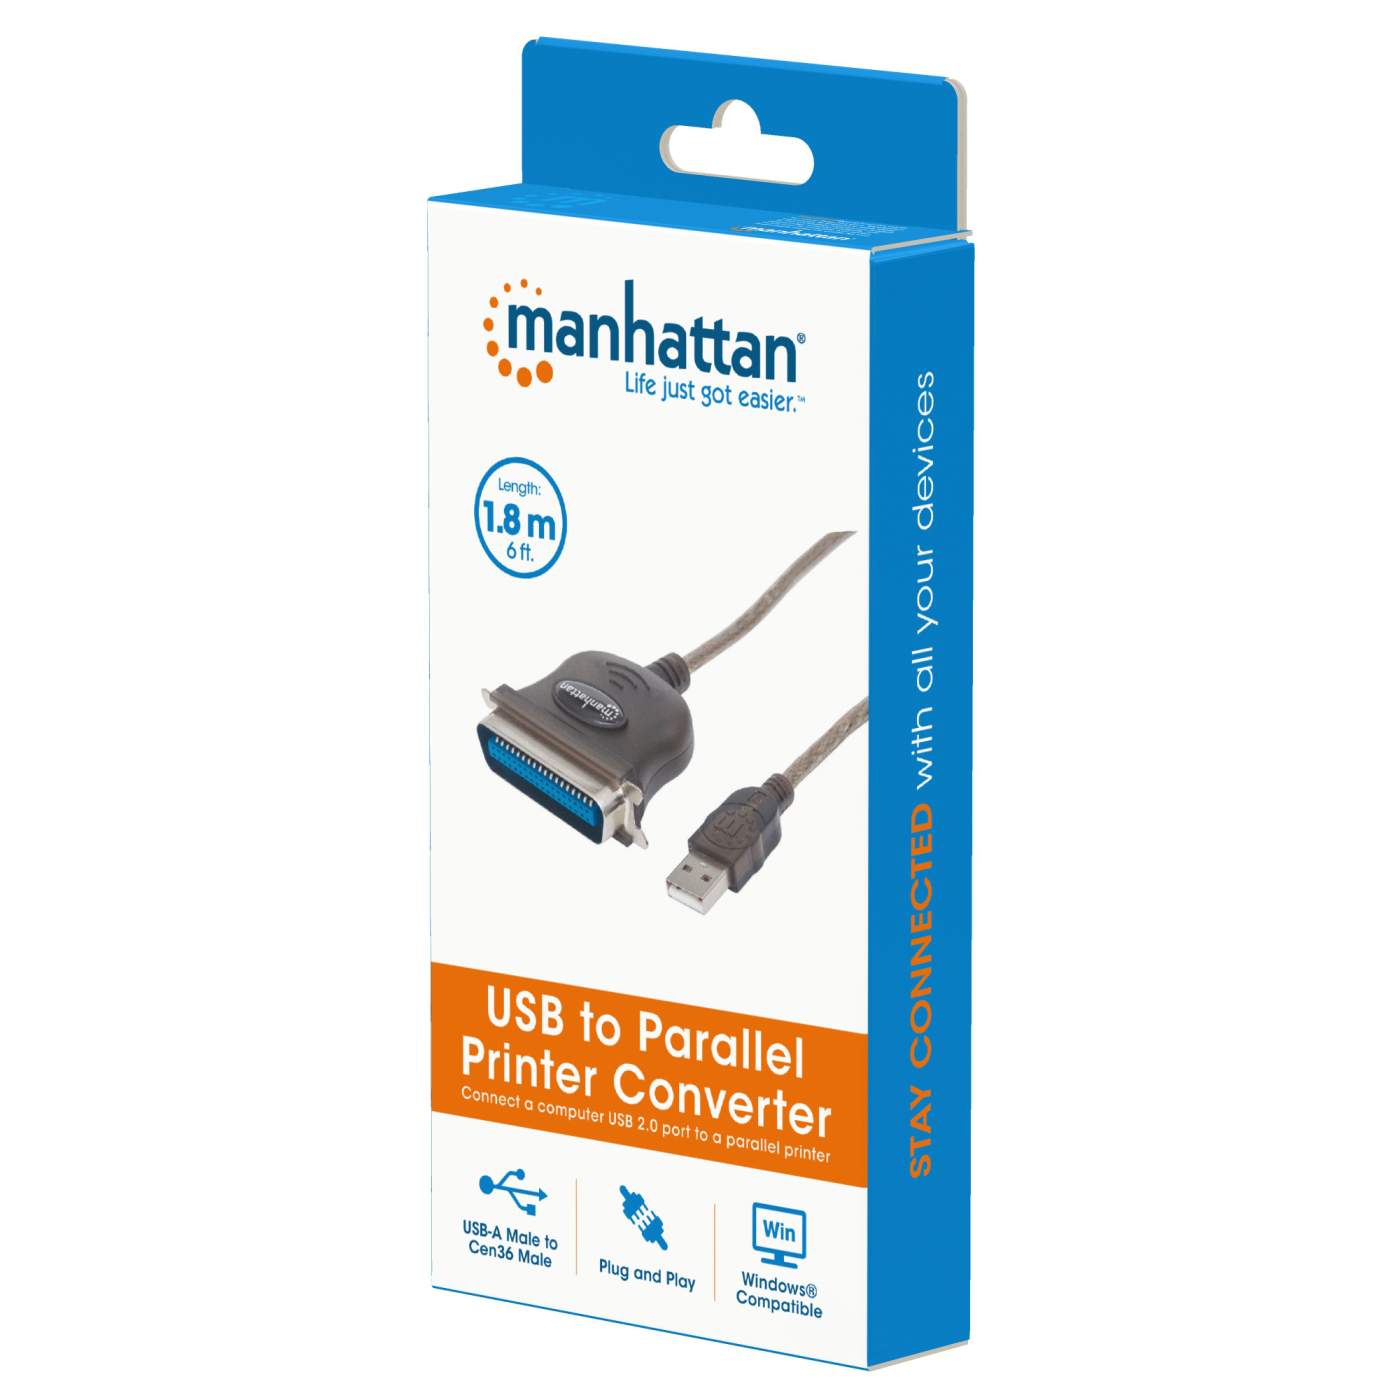 Full-Speed USB to Cen36 Parallel Printer Converter Packaging Image 2